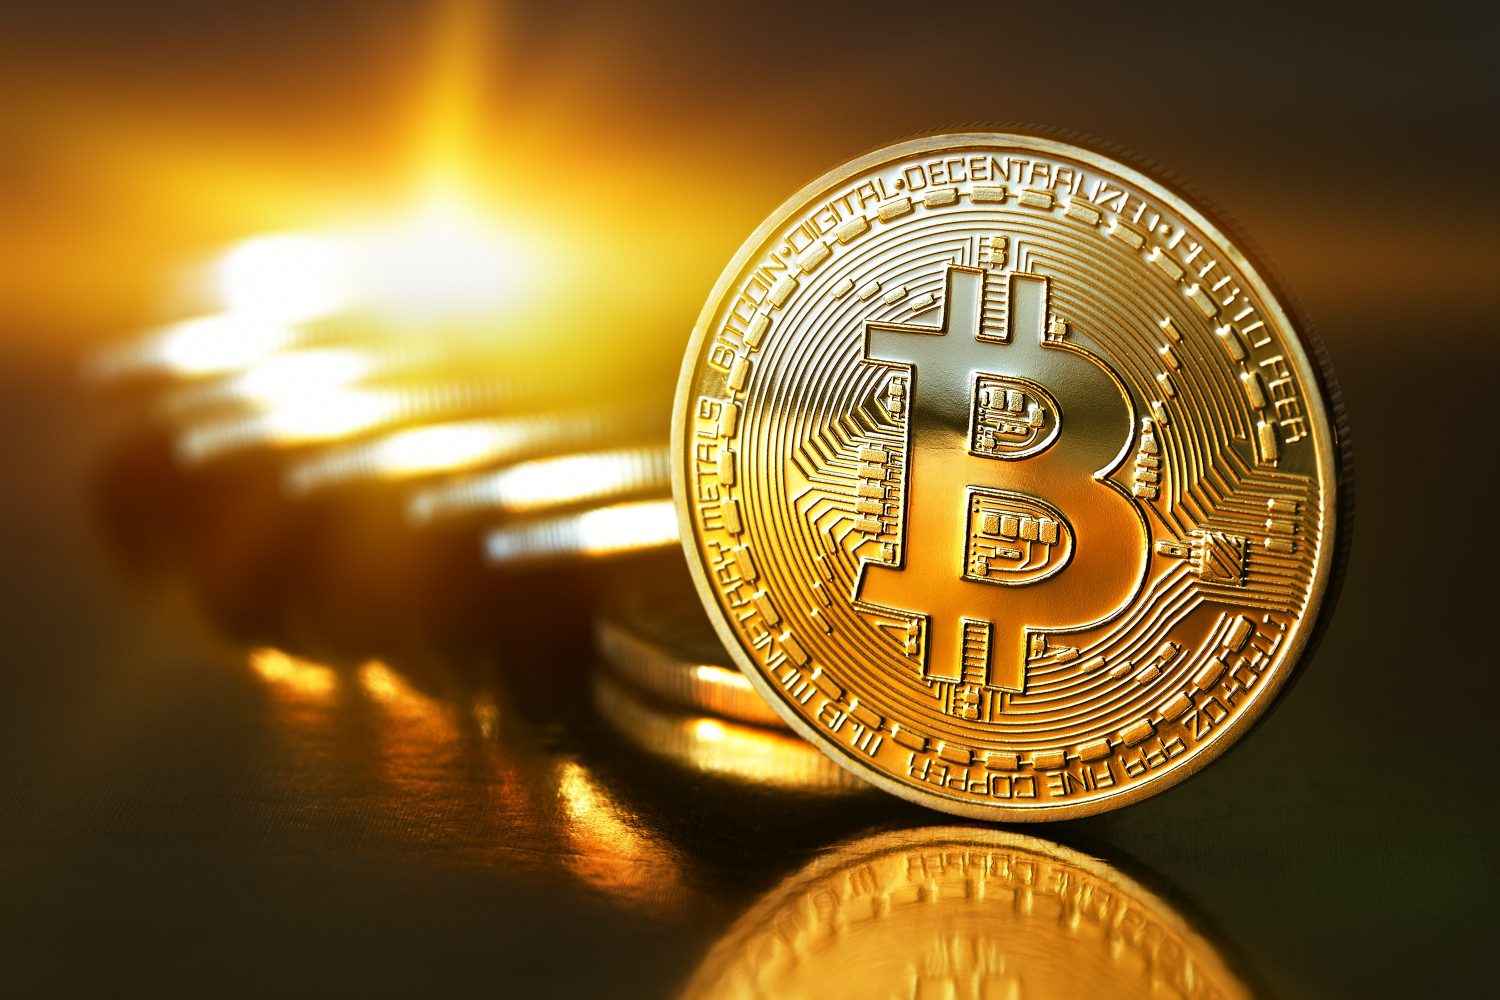 Giá bitcoin hôm nay 19/11: Tỷ giá bitcoin hiện nay gần 8.000 USD